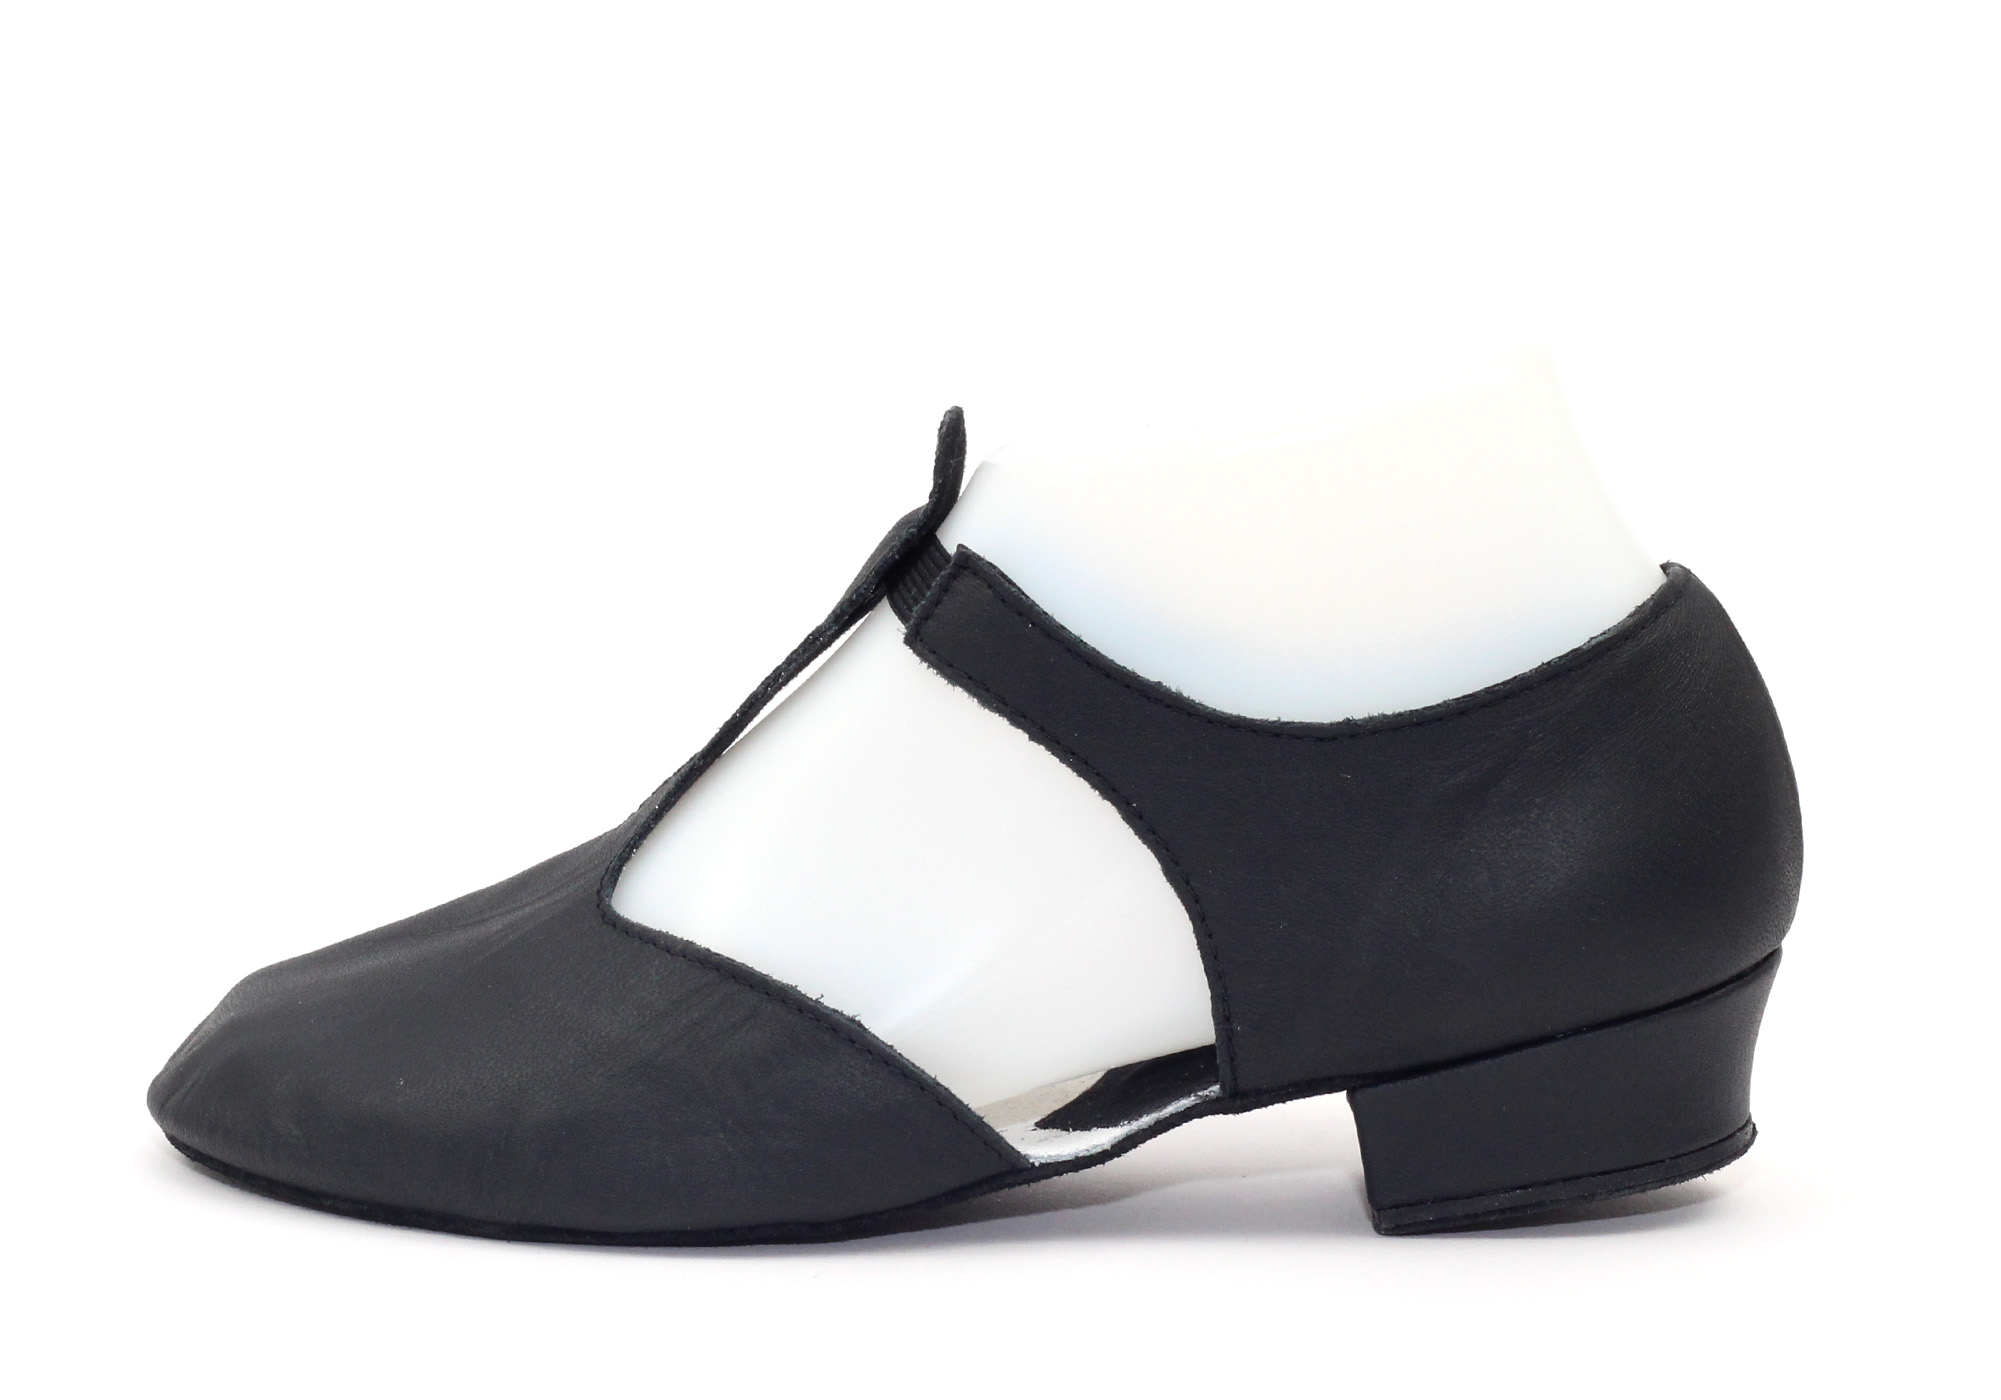 Damen Weißes Leder Tanz Griechische Sandalen Unterricht Jive Cerco Salsa Schuhe 